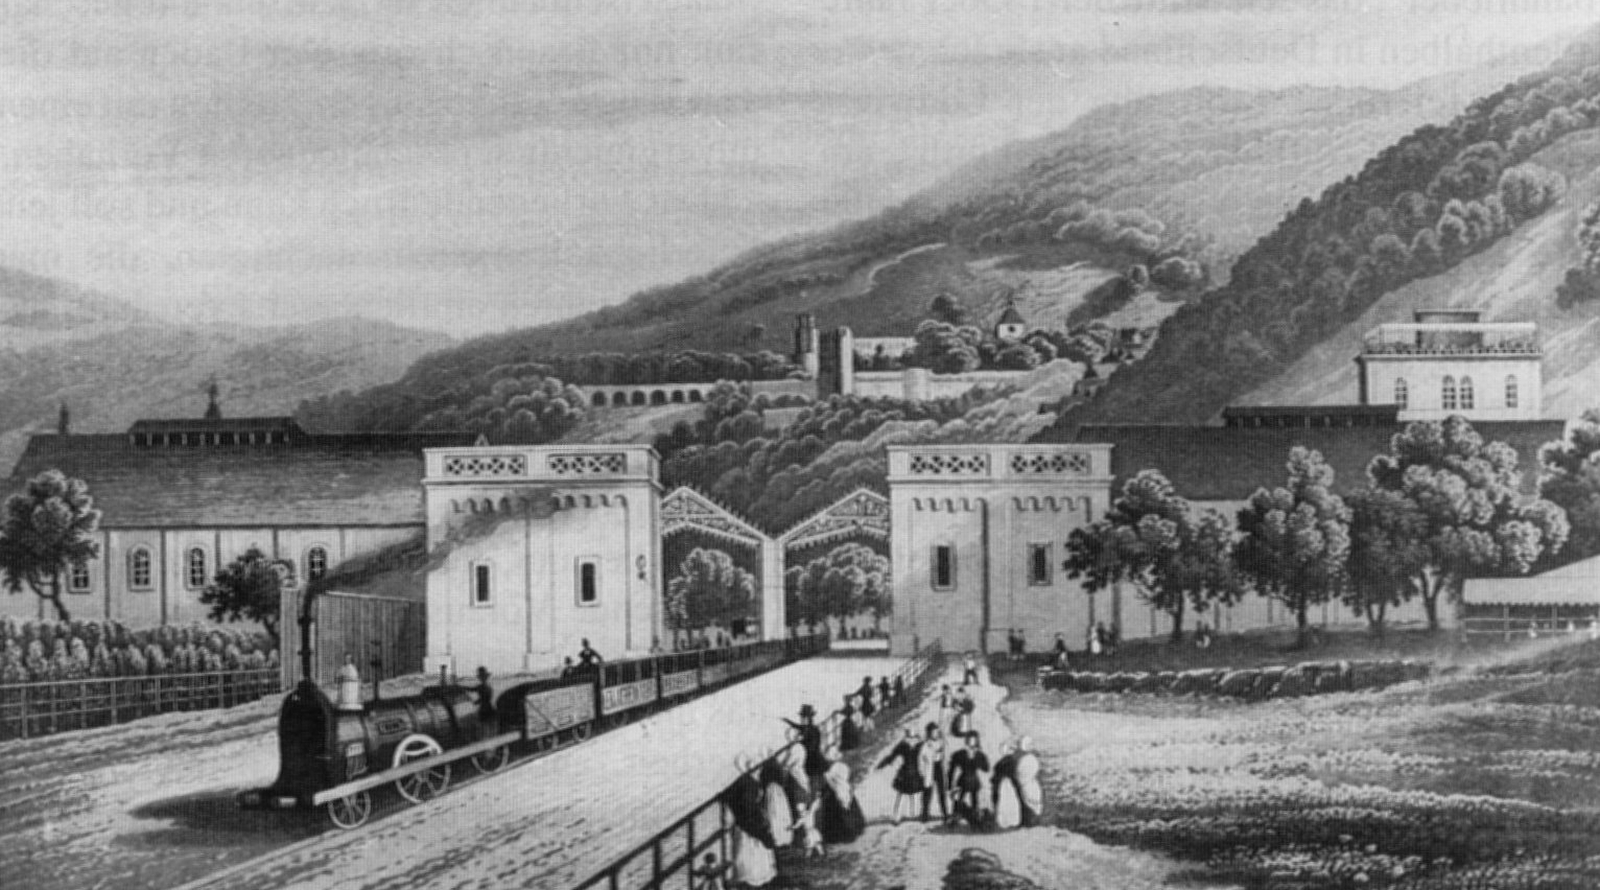 A train exiting Heidelberg station, 1840